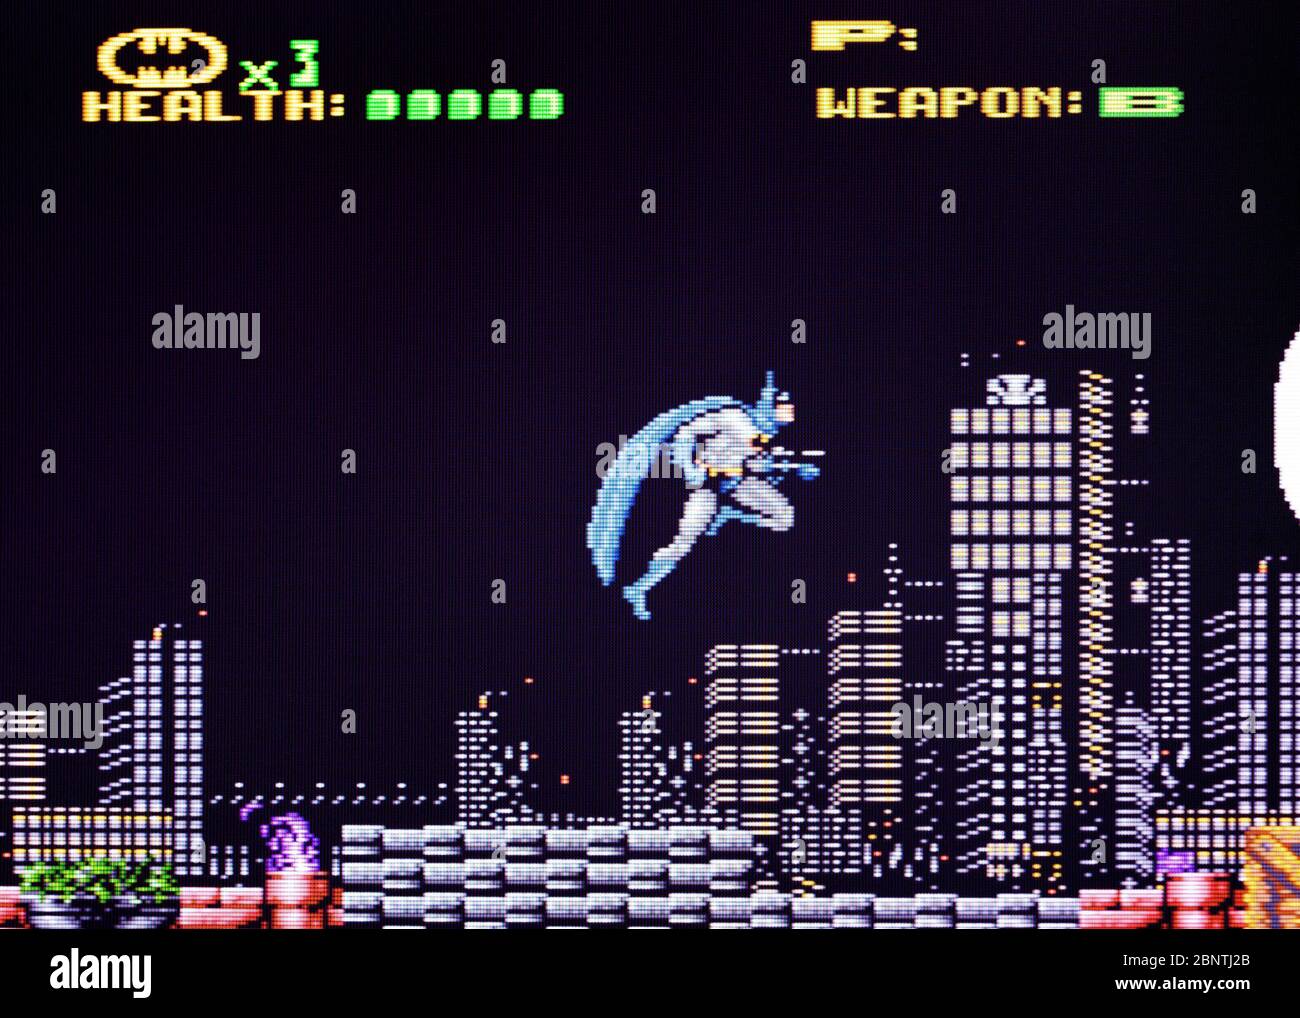 Batman Revenge of the Joker - SNES Super Nintendo - Editorial use only  Stock Photo - Alamy